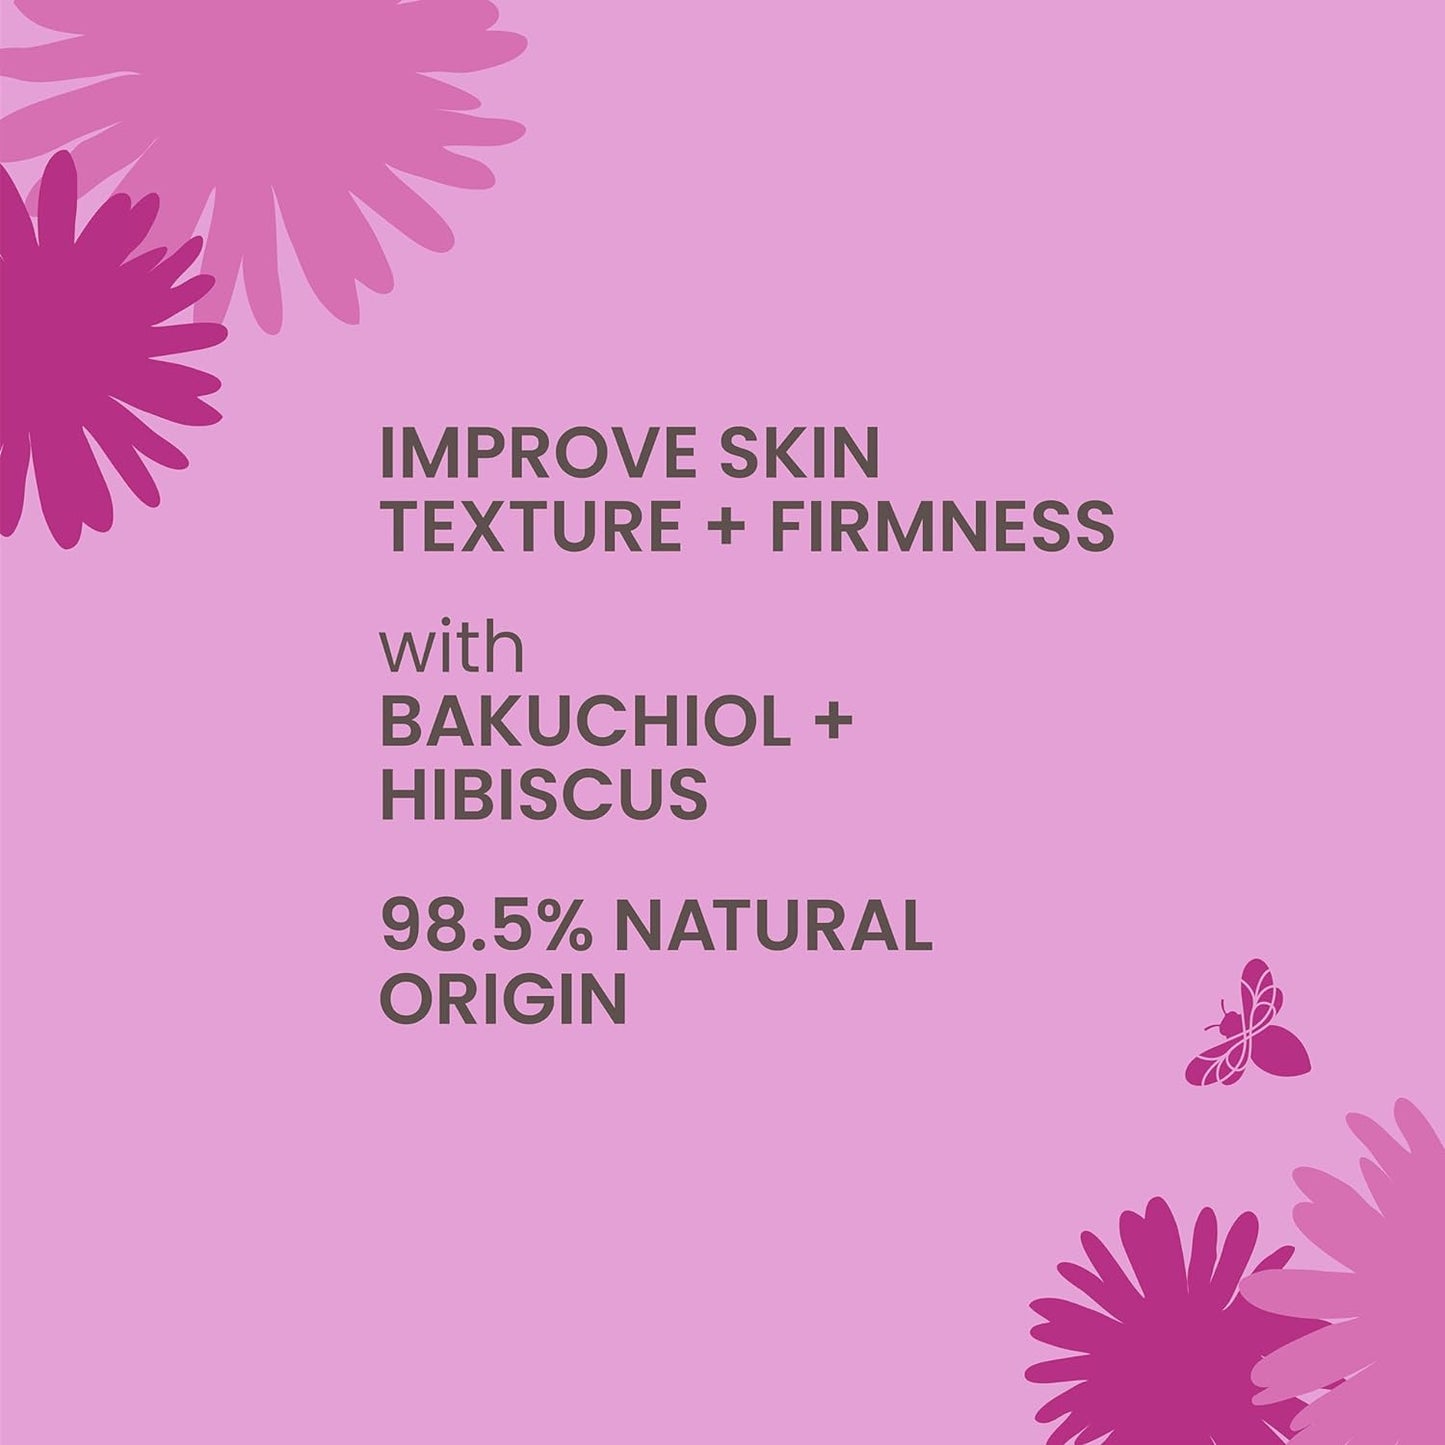 Burt's Bees Firming Collagen Face Serum, Natural Retinol Alternative Improves Skin Texture & Supports Anti-Aging, with Bakuchiol & Hibiscus, Lightweight - Firming Booster Serum (1 oz)